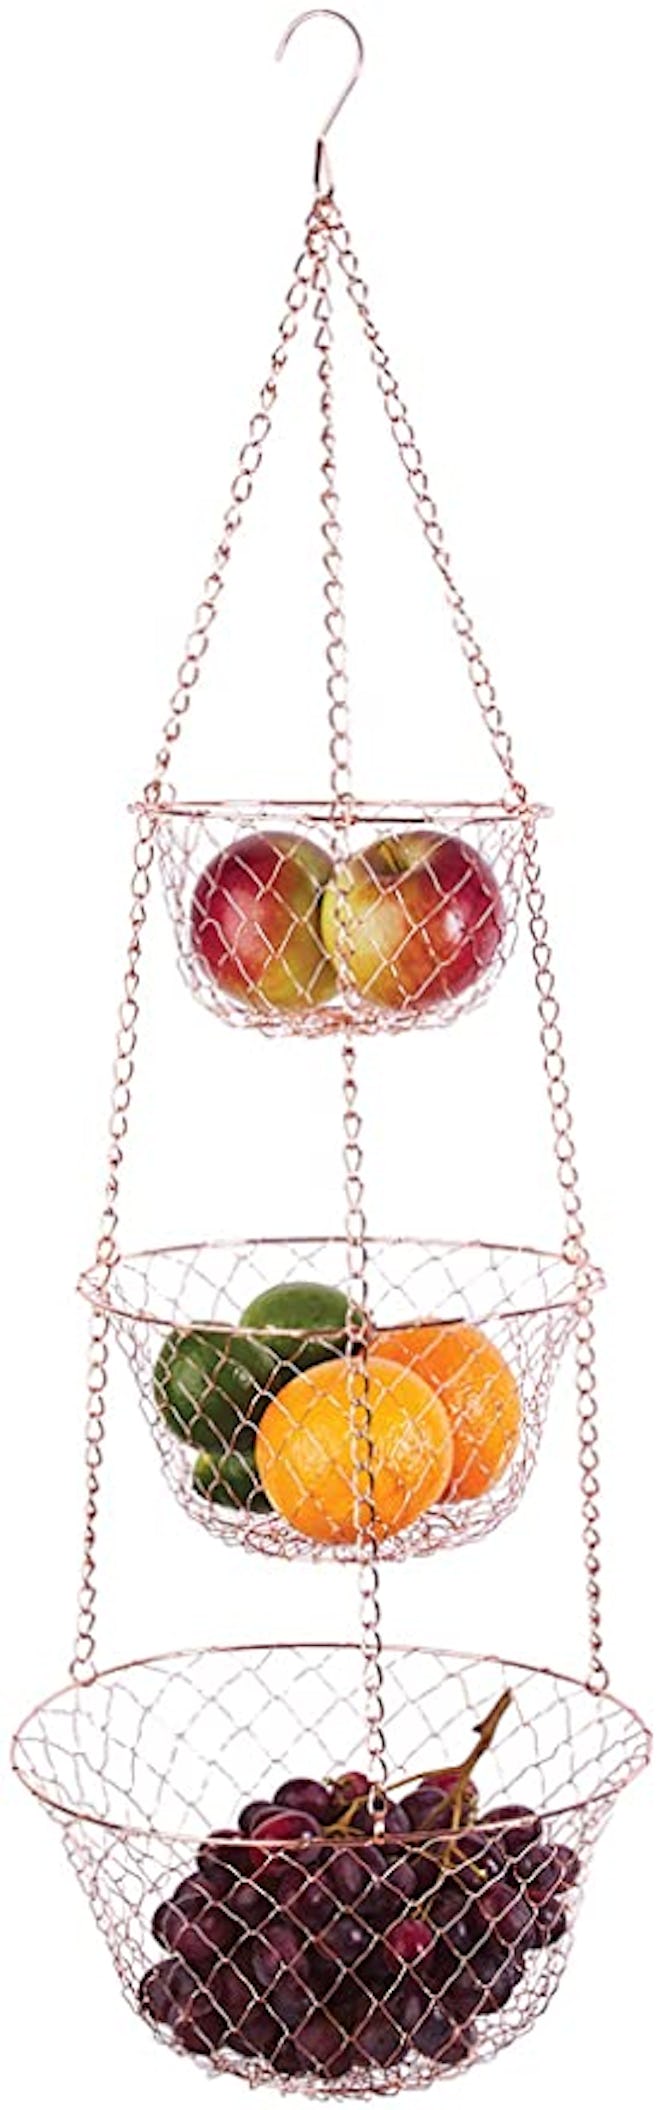 Fox Run Copper Hanging Fruit Basket